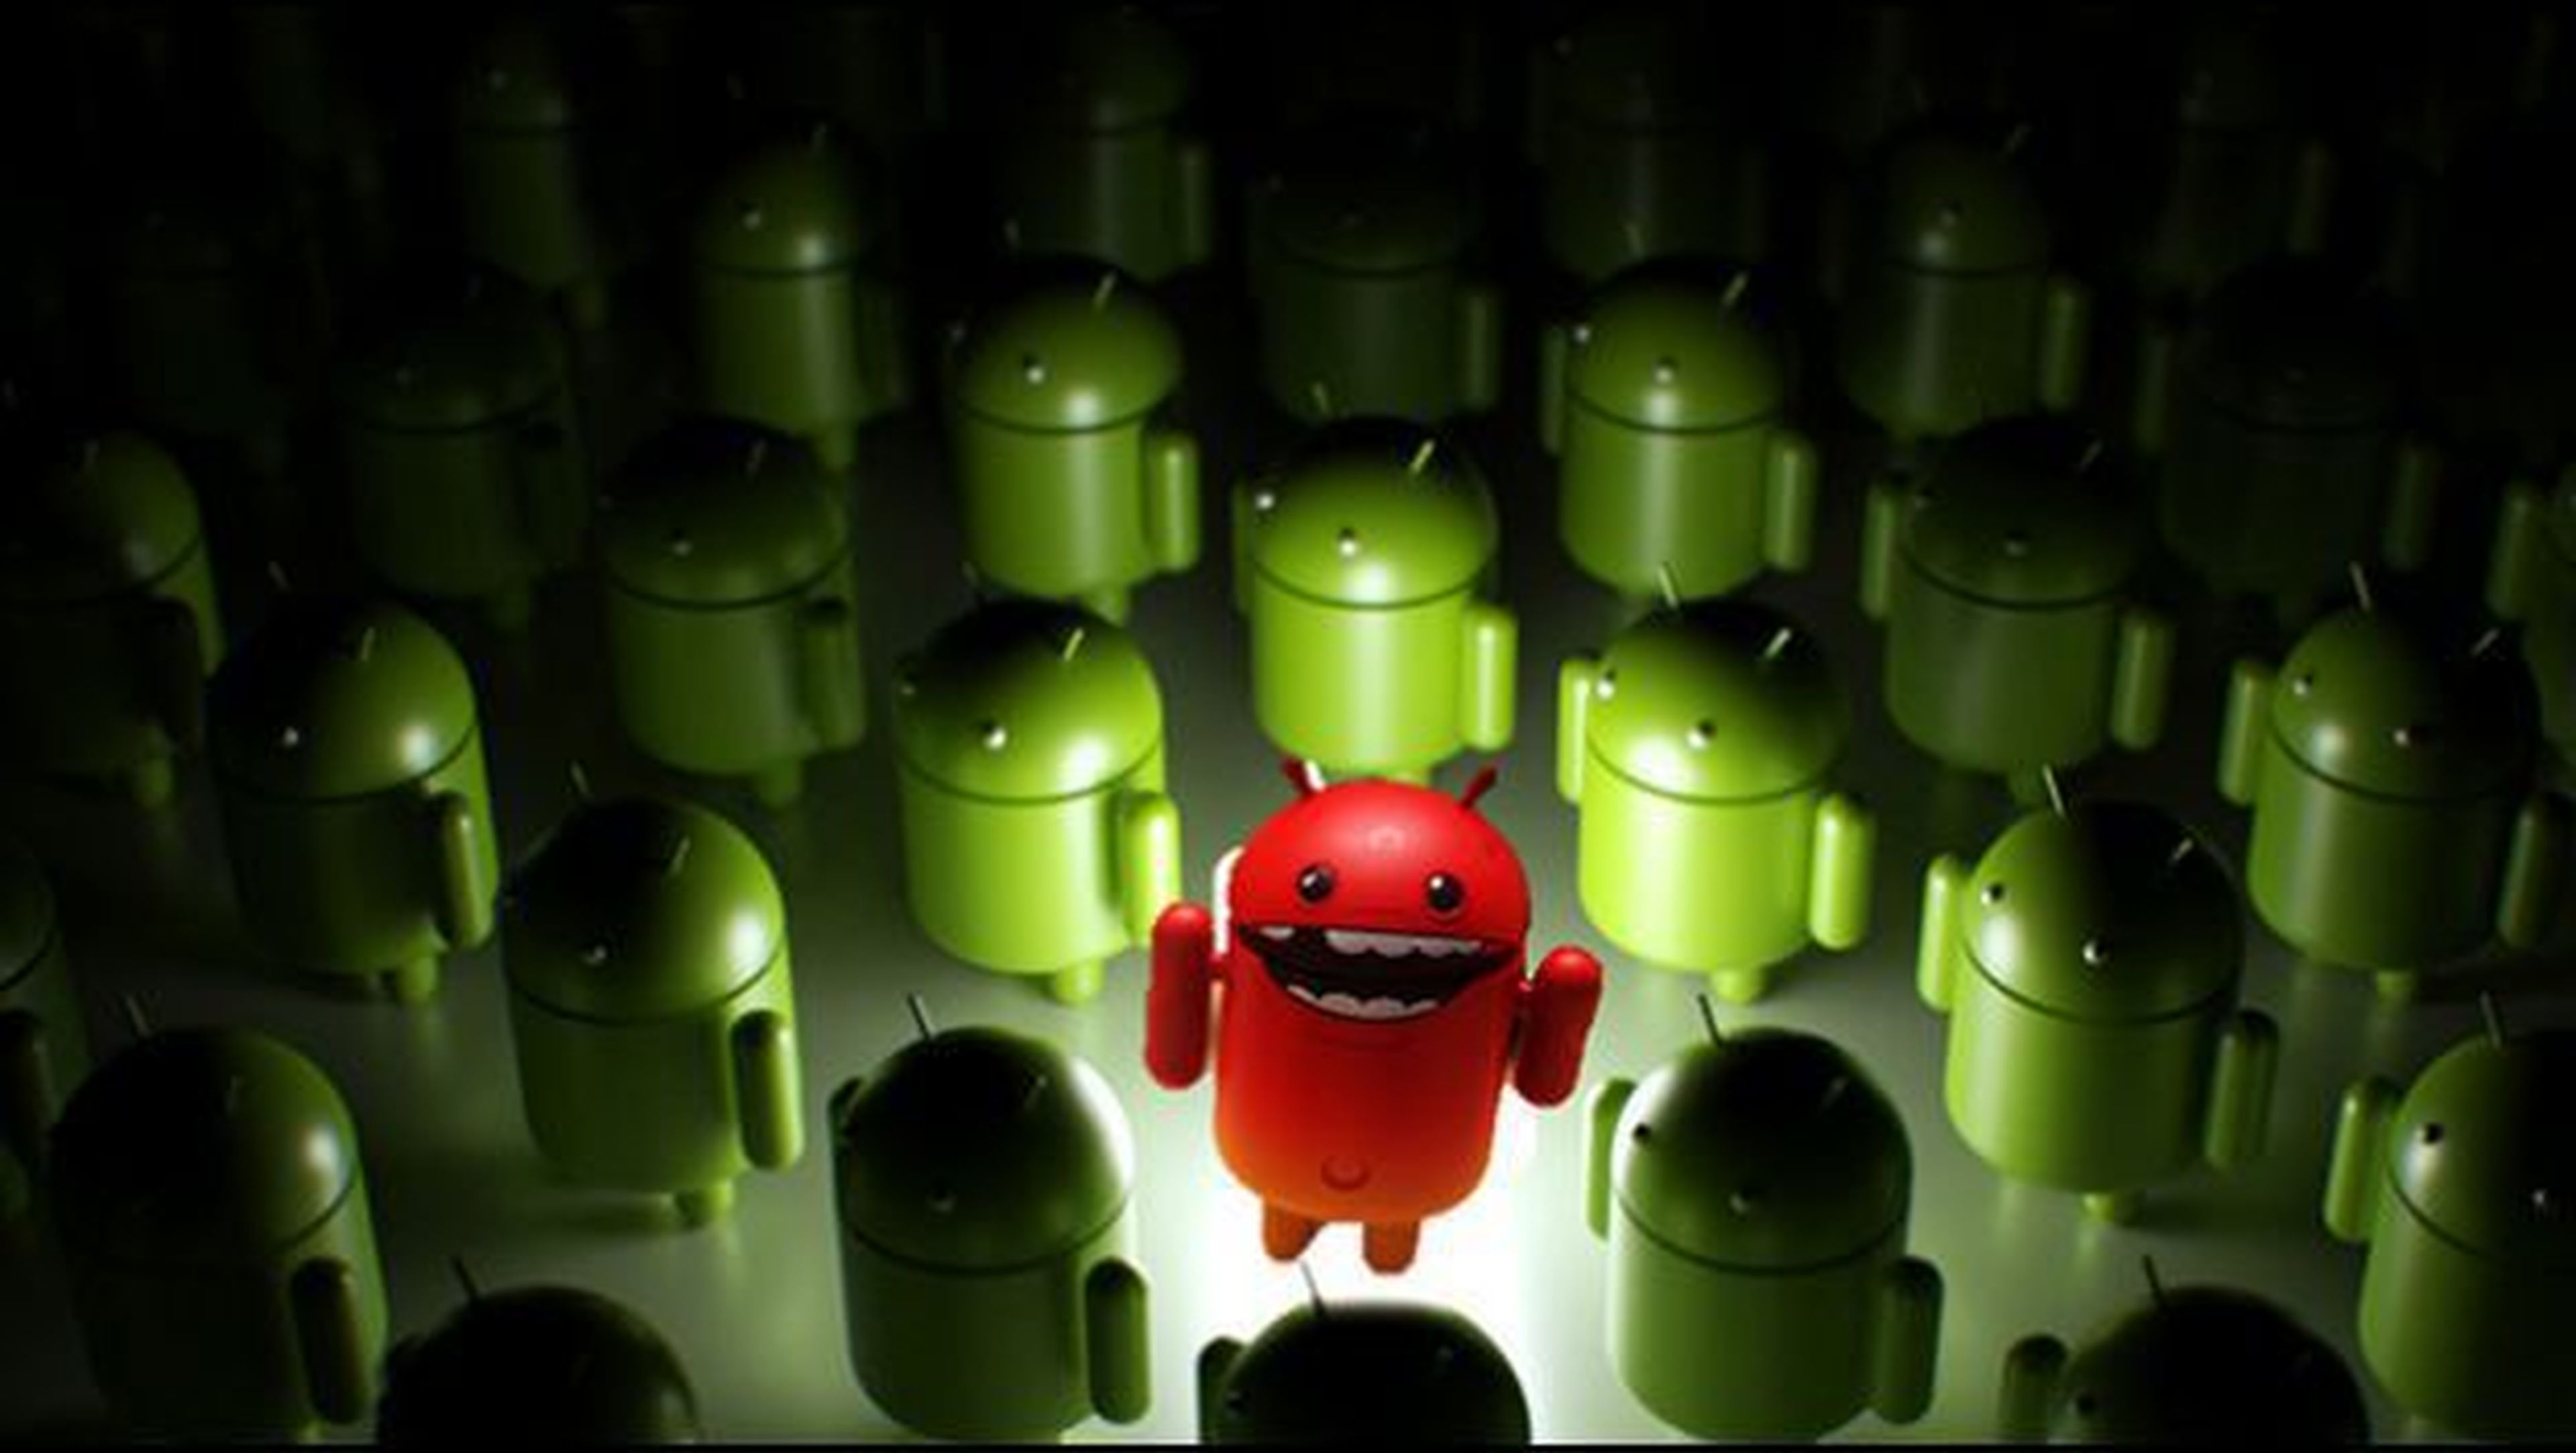 Malware Android aplicaciones infectadas